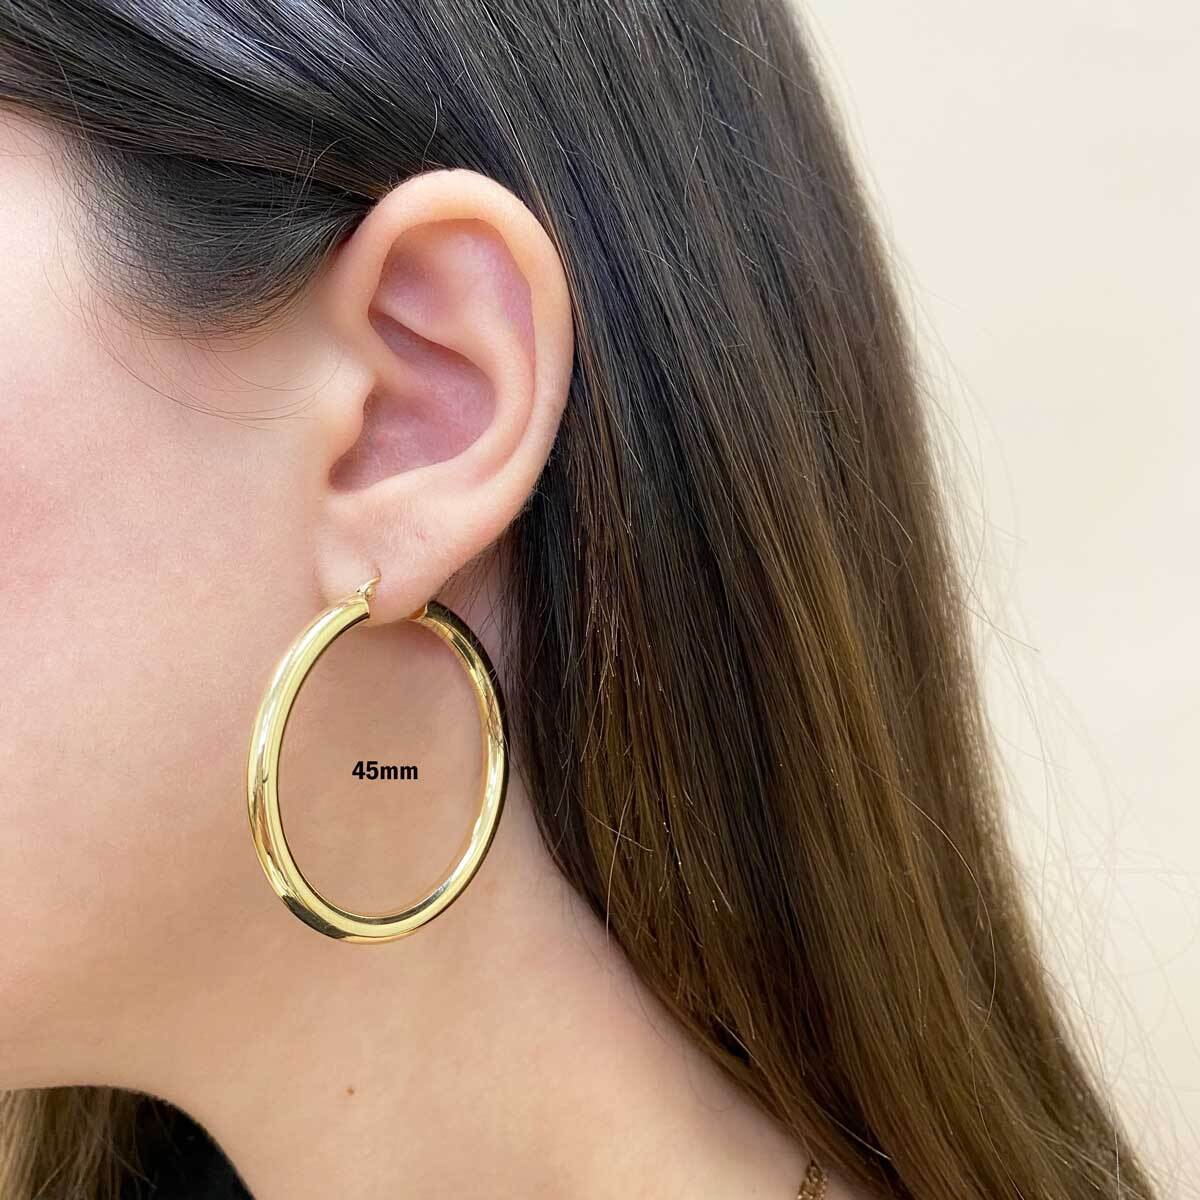 These $11 earrings look just like Bottega Veneta's popular style